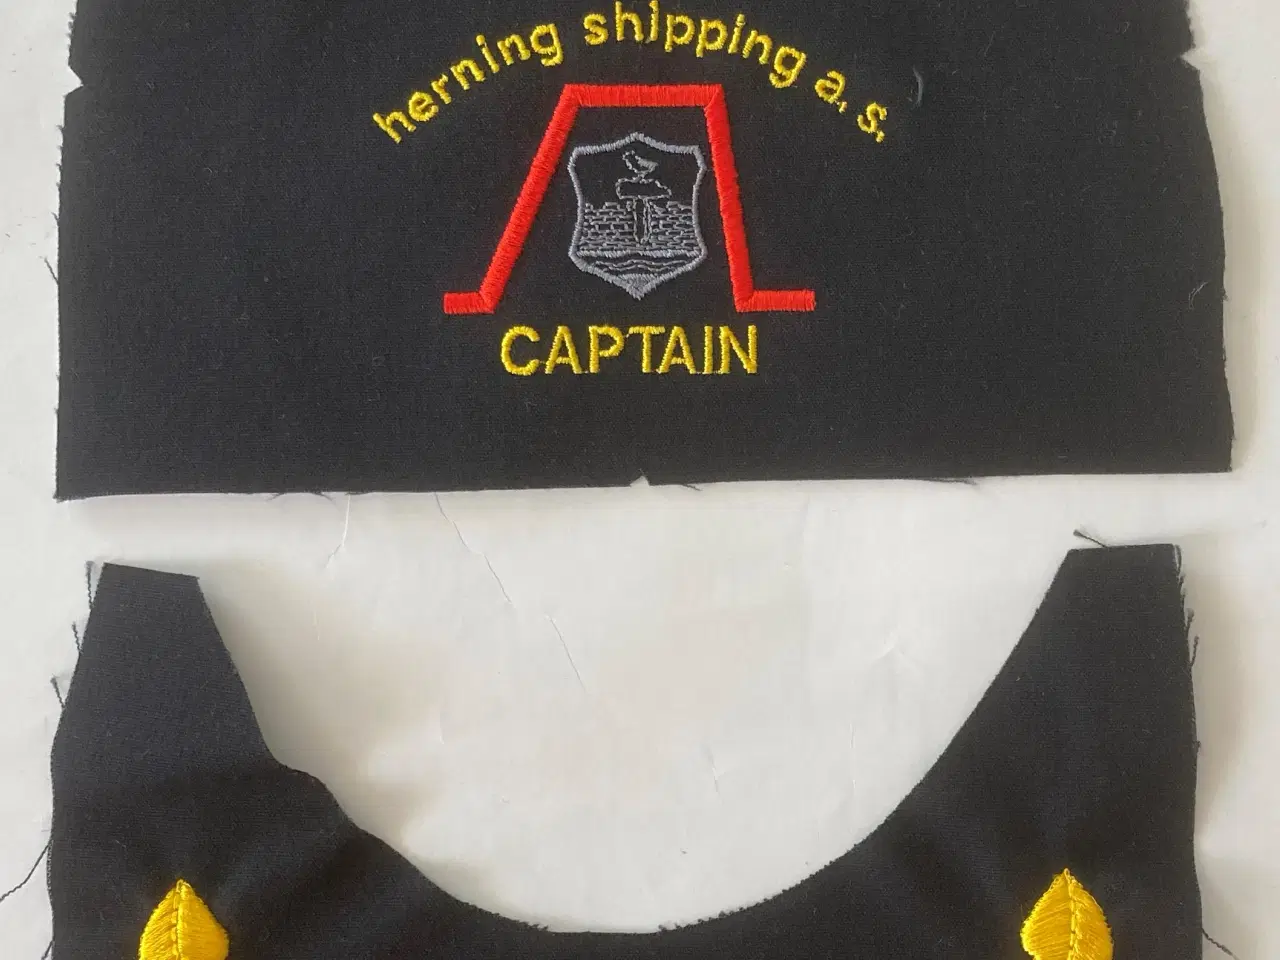 Billede 1 - Rederi herning shipping a.s. logo